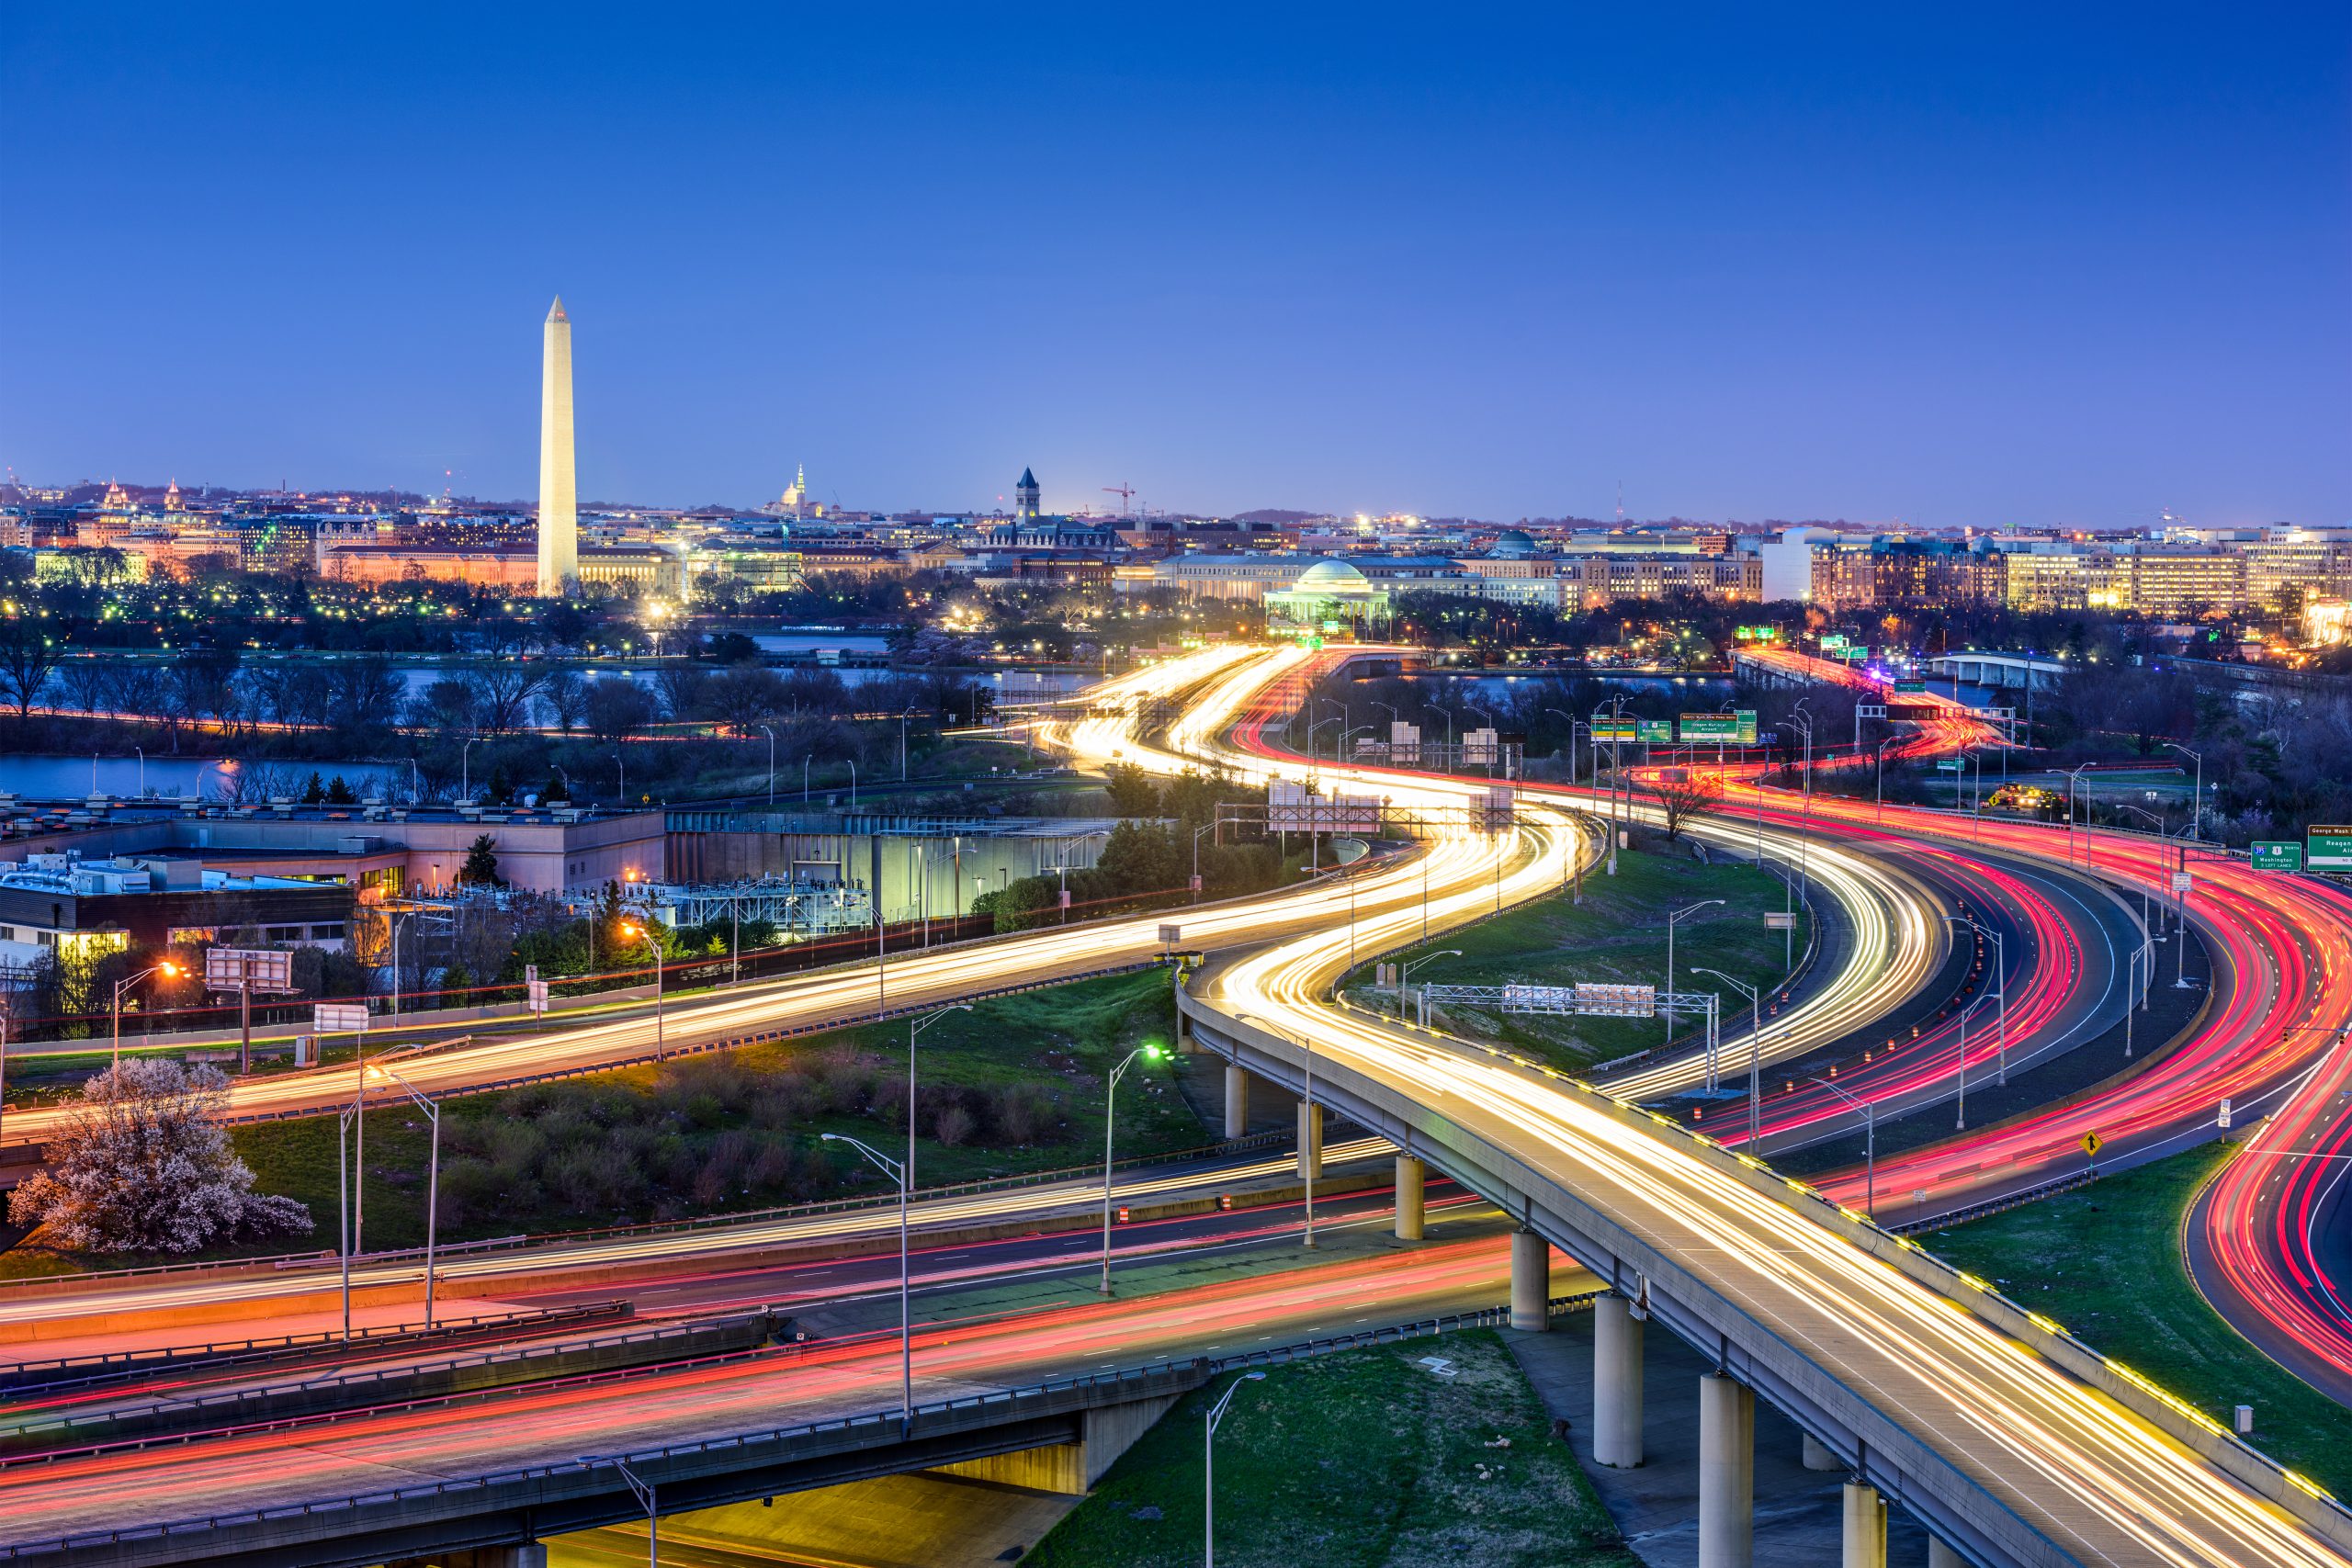 Washington, DC skyline with highways and monuments.